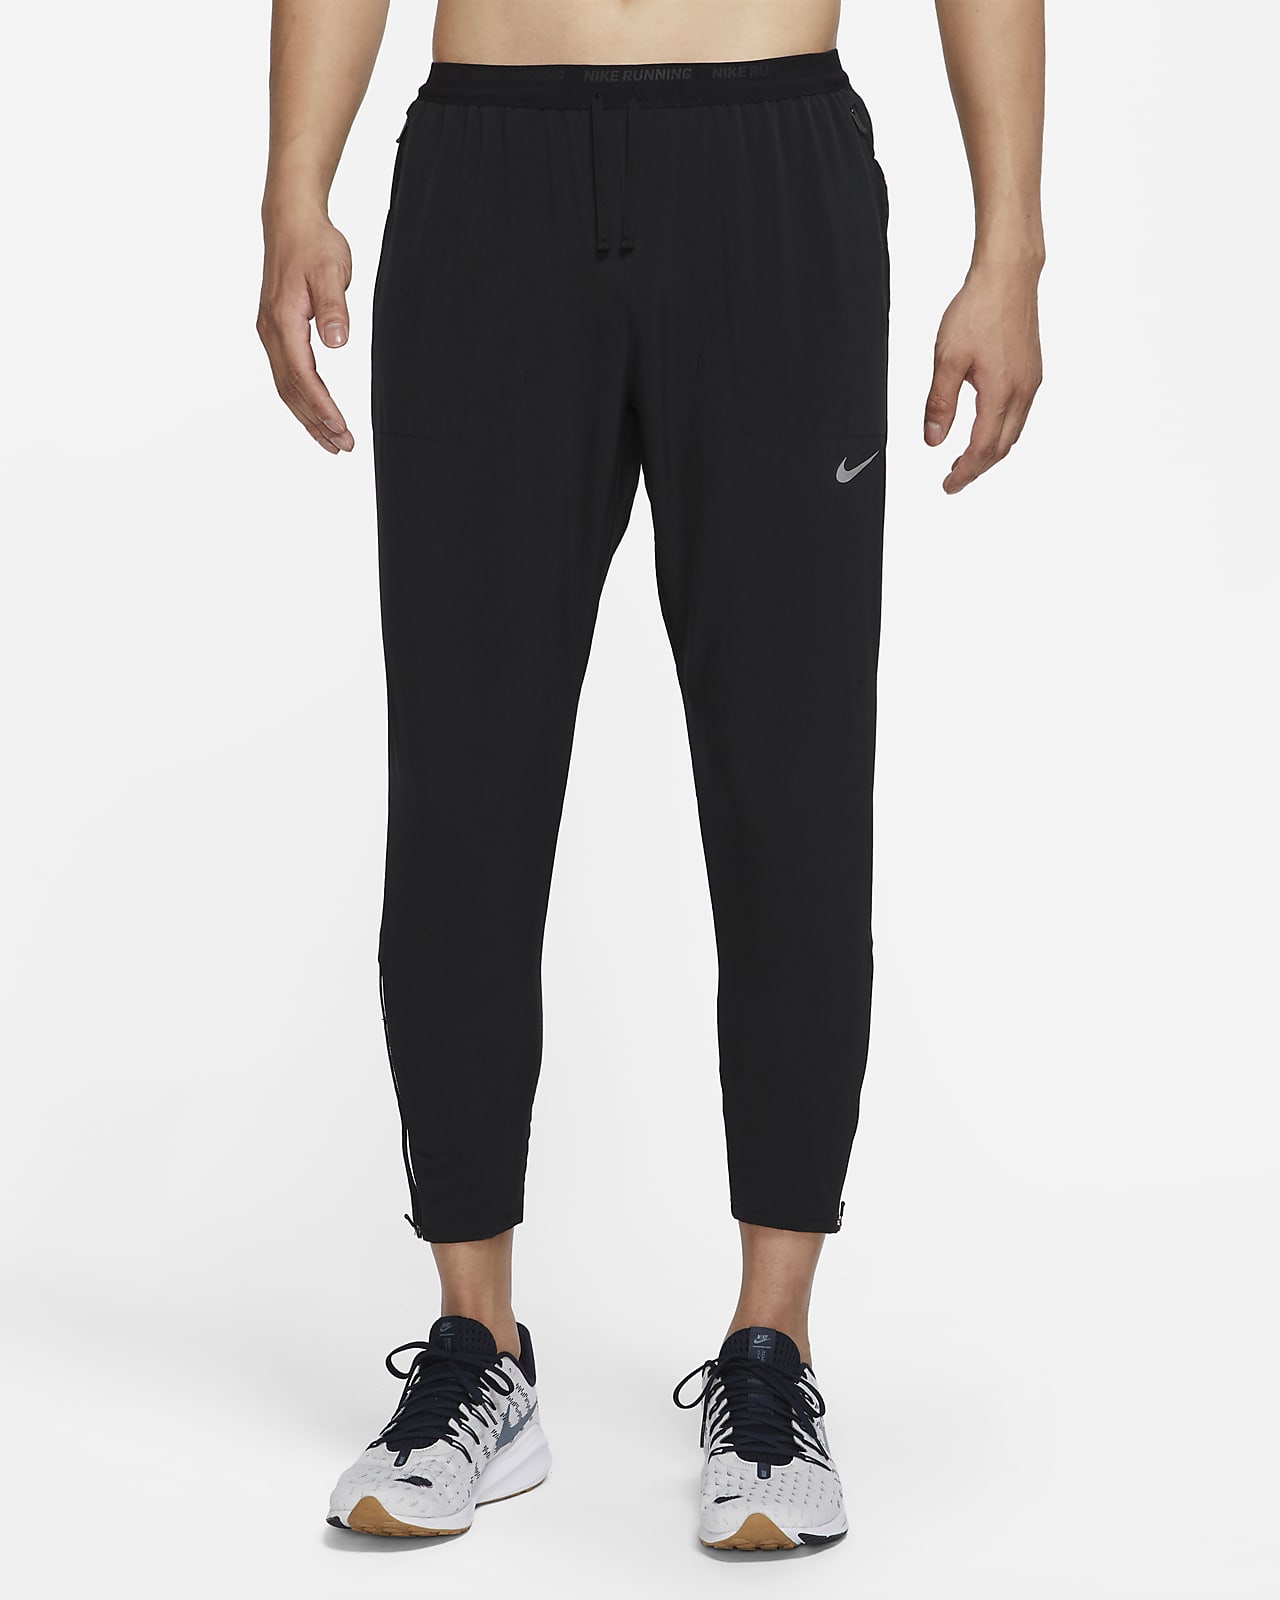 Nike Dri-FIT Men's Running Trousers. Nike